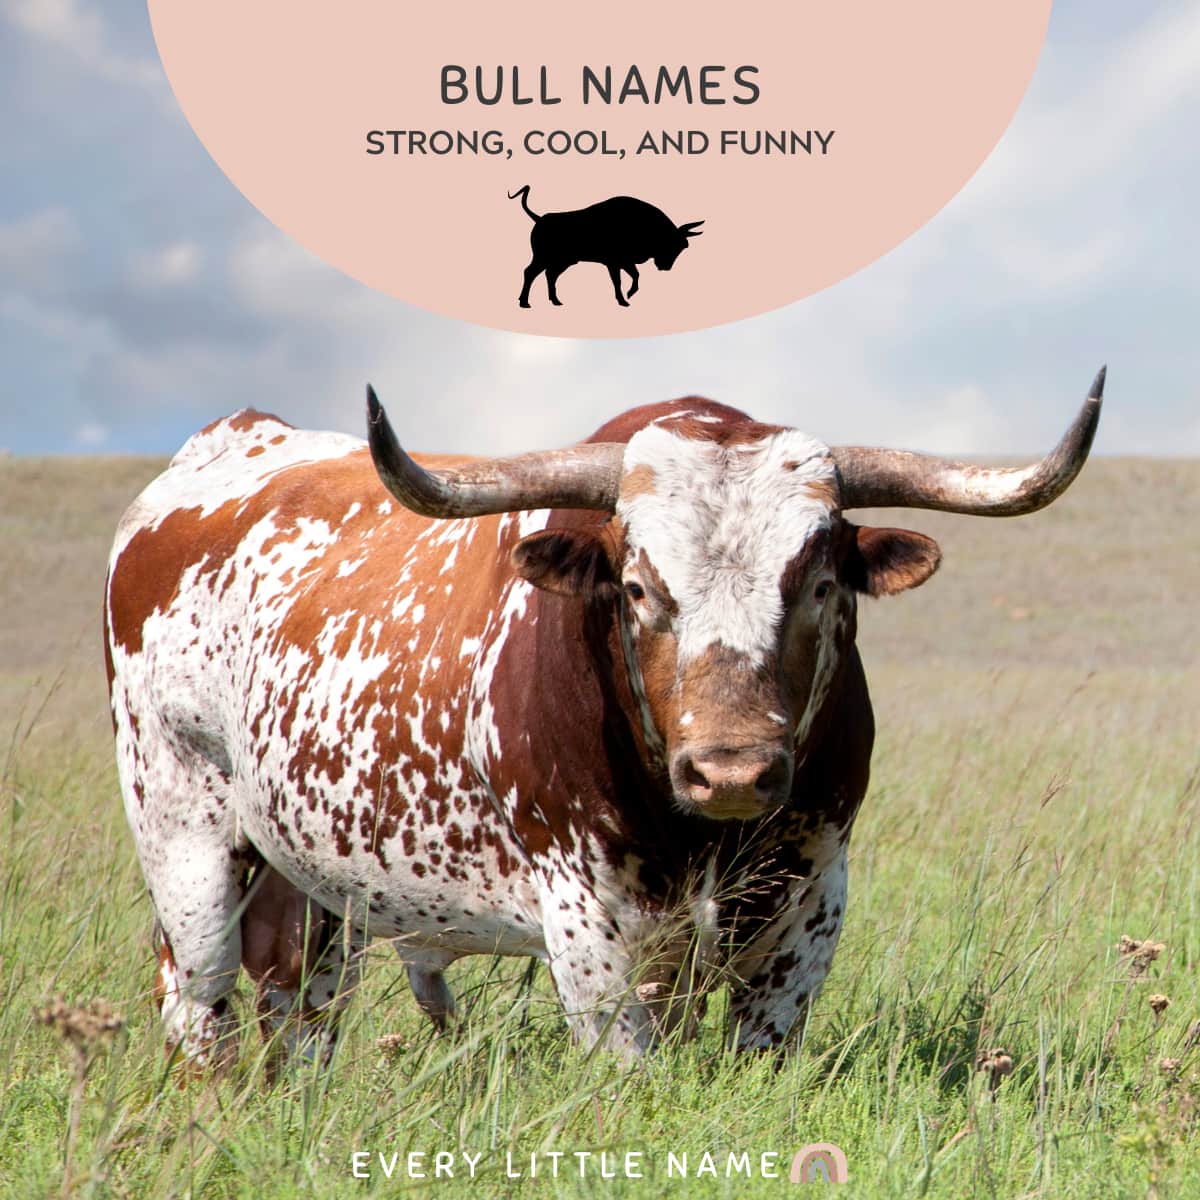 Texas honghorn bull in fields.